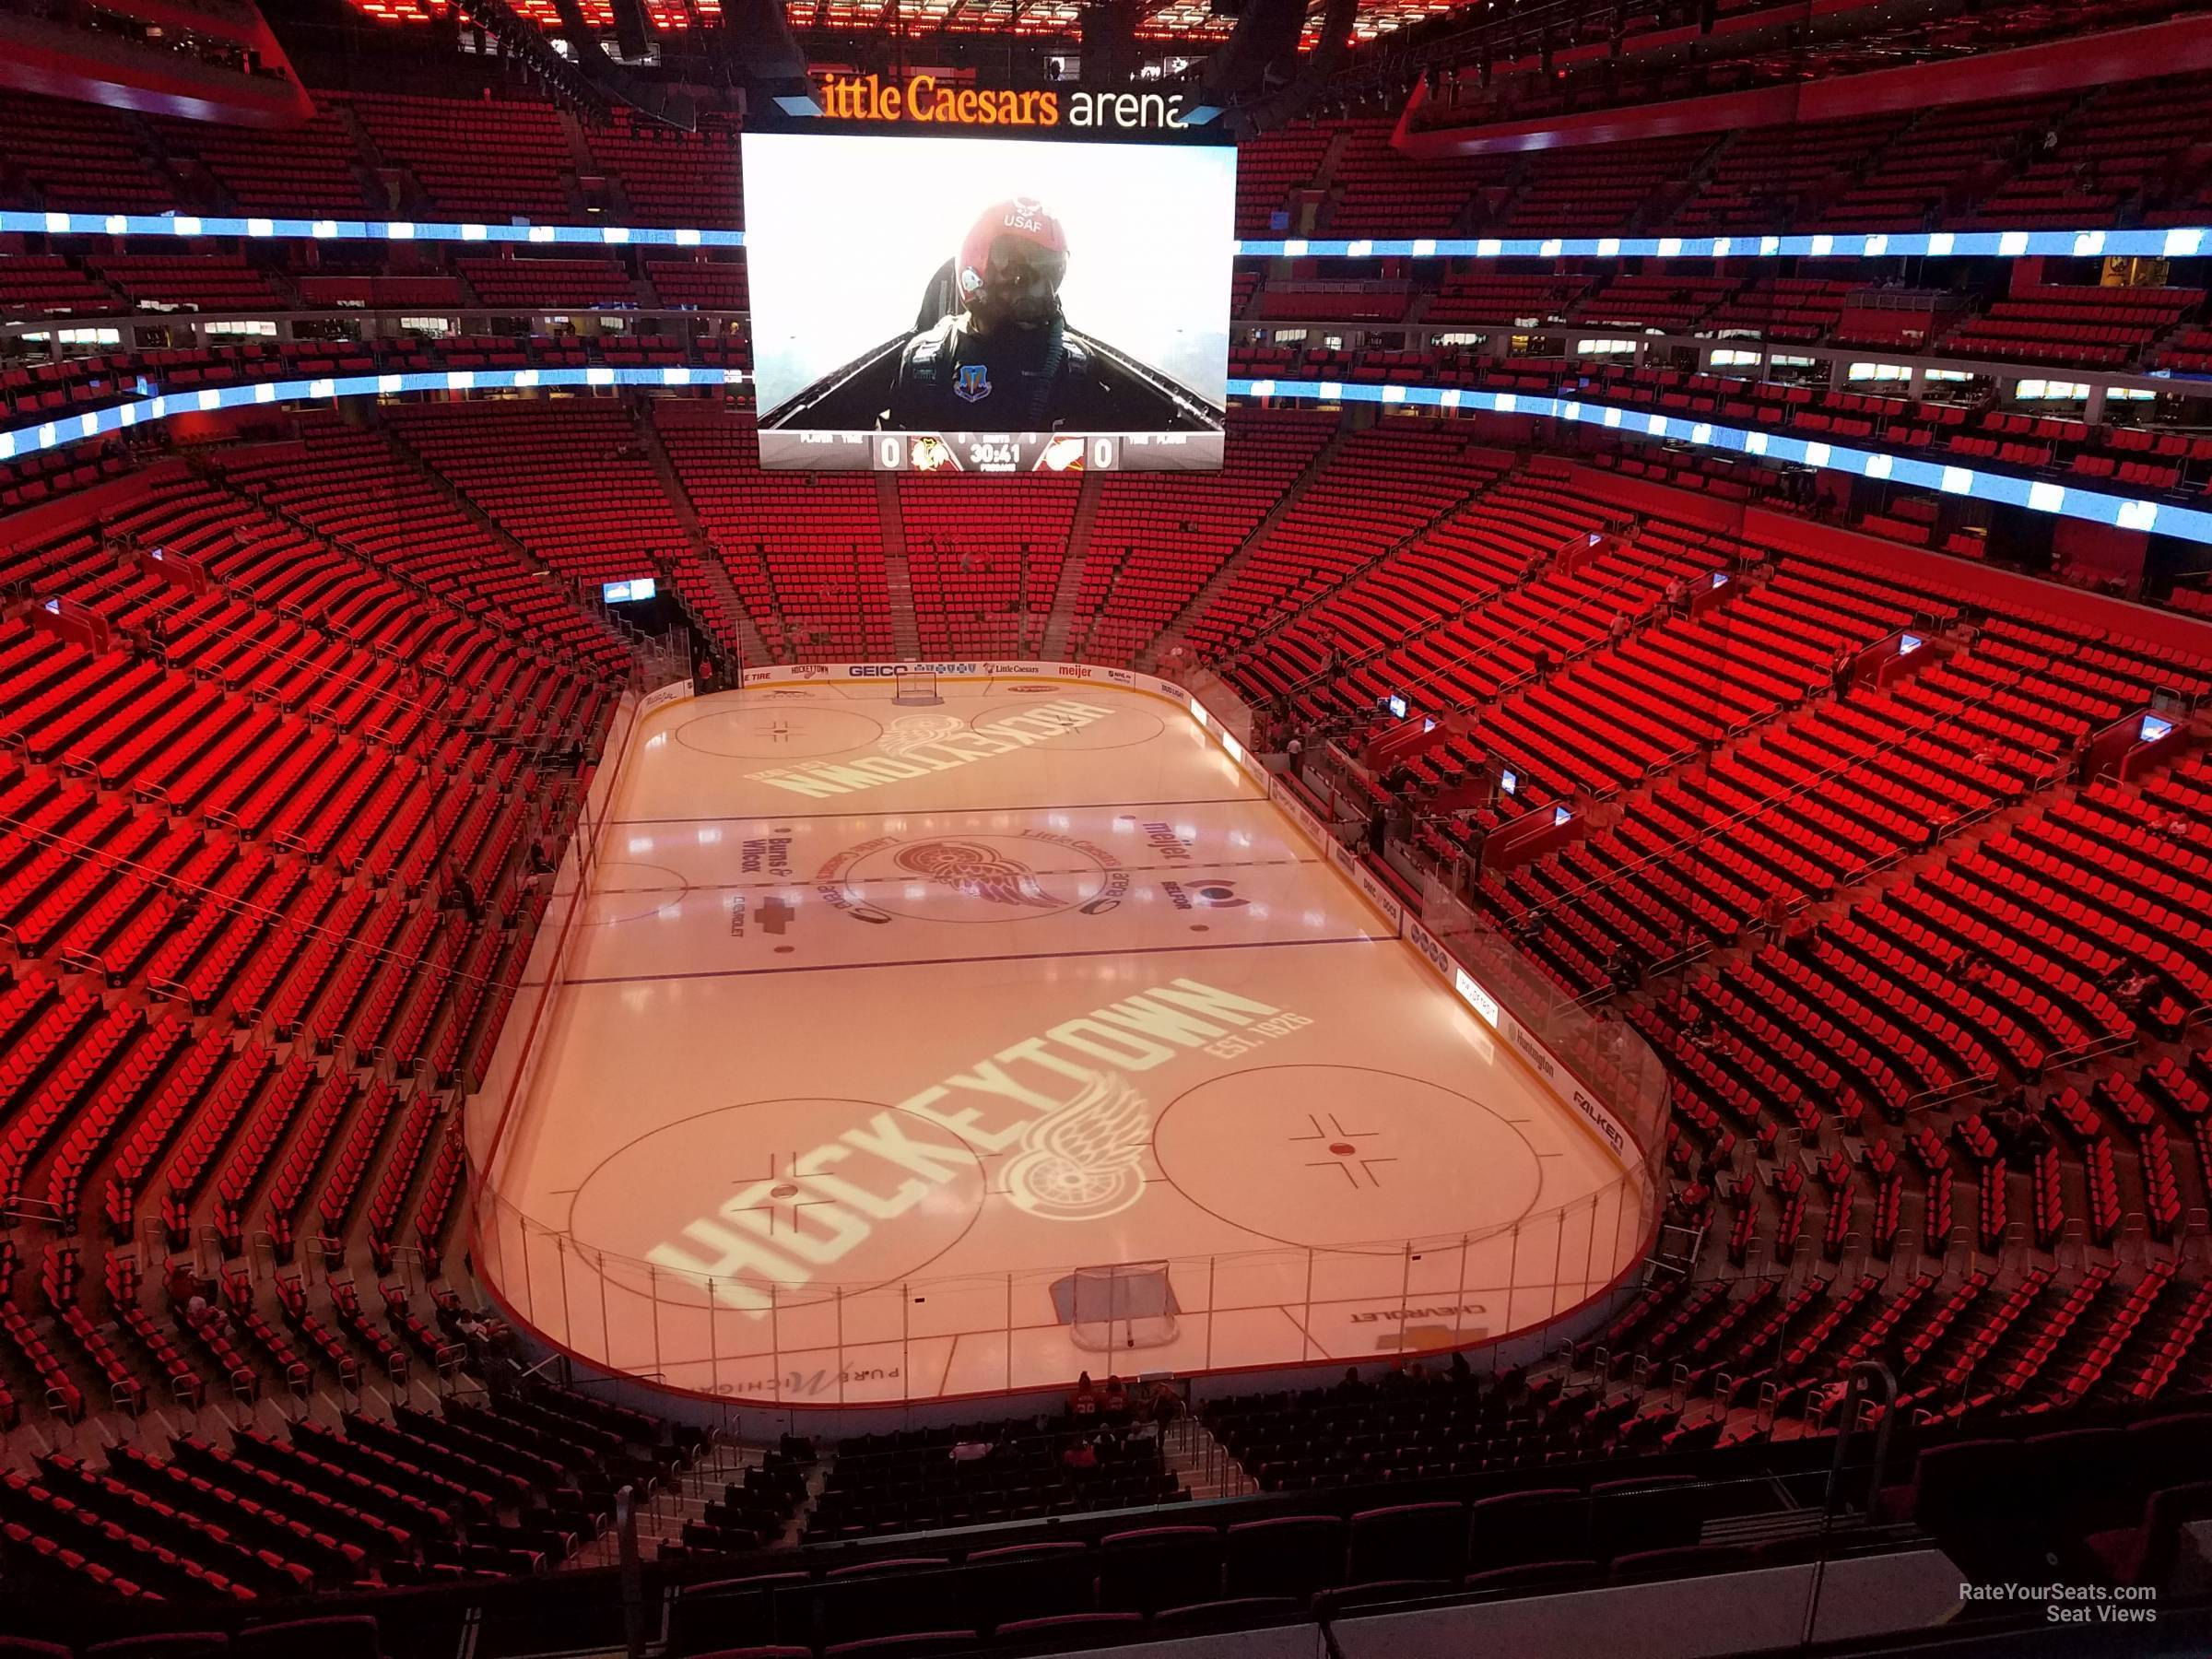 mezzanine 3, row 4 seat view  for hockey - little caesars arena